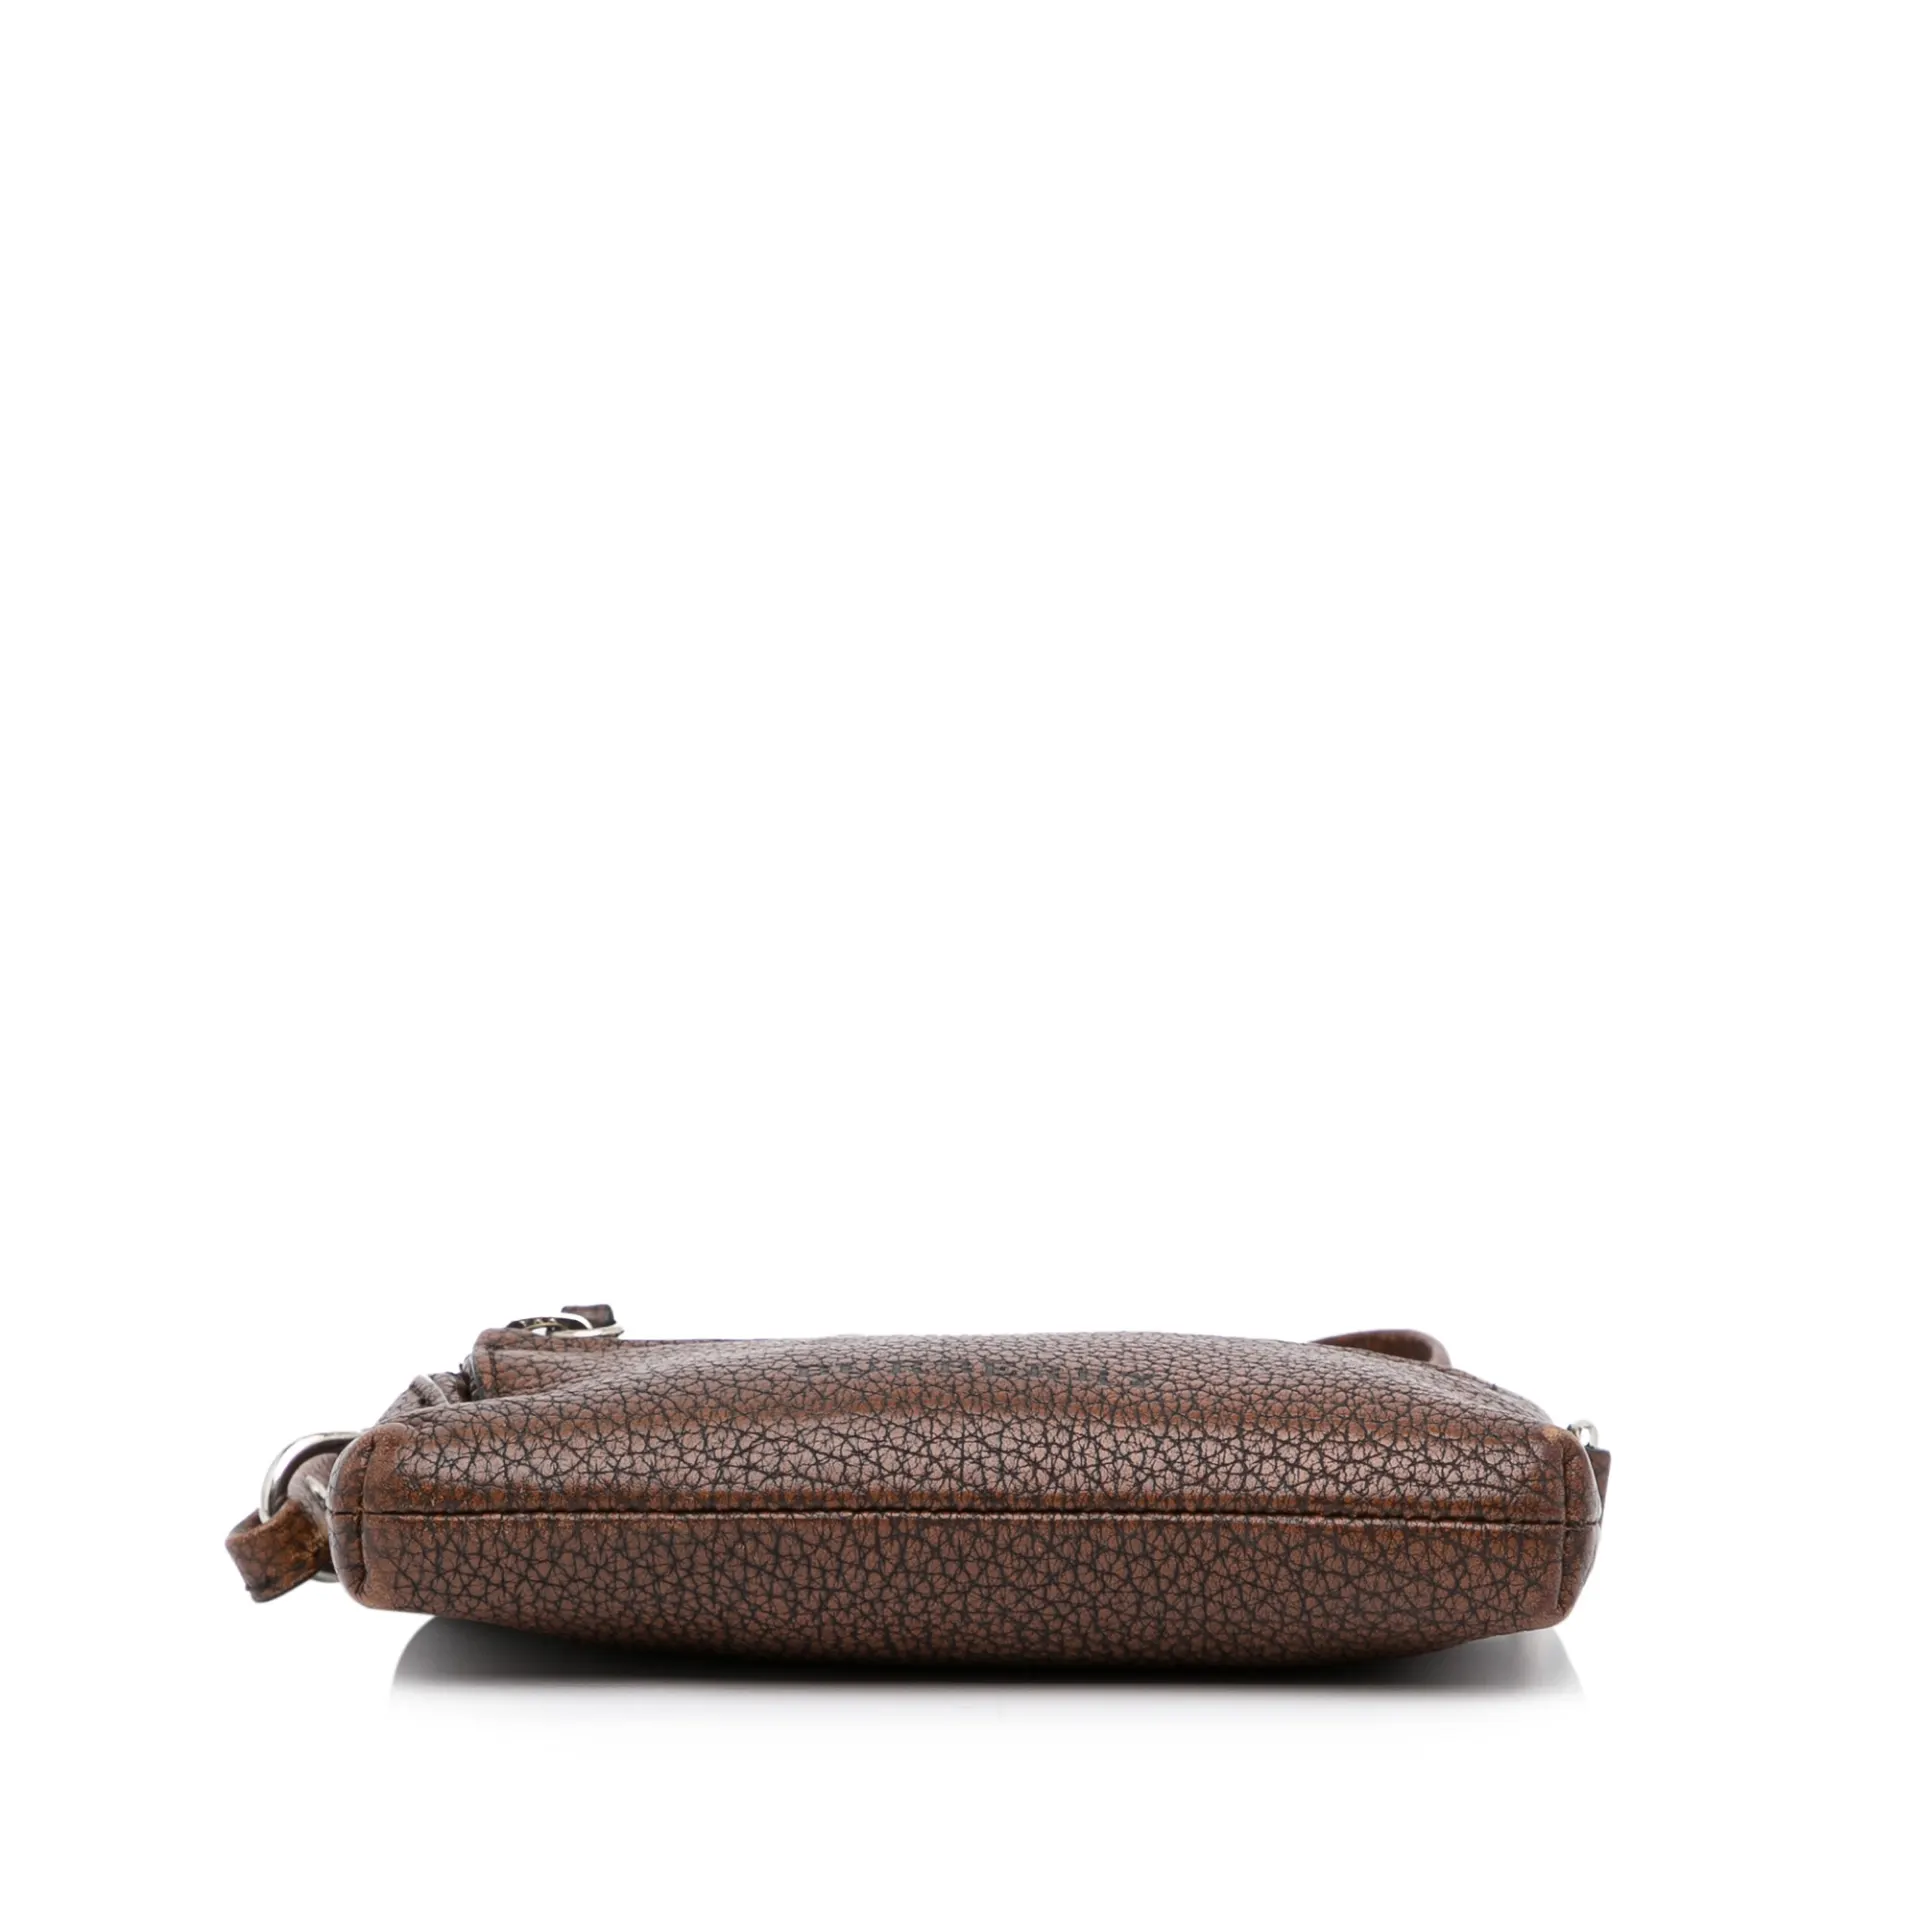 Burberry Leather Crossbody Bag